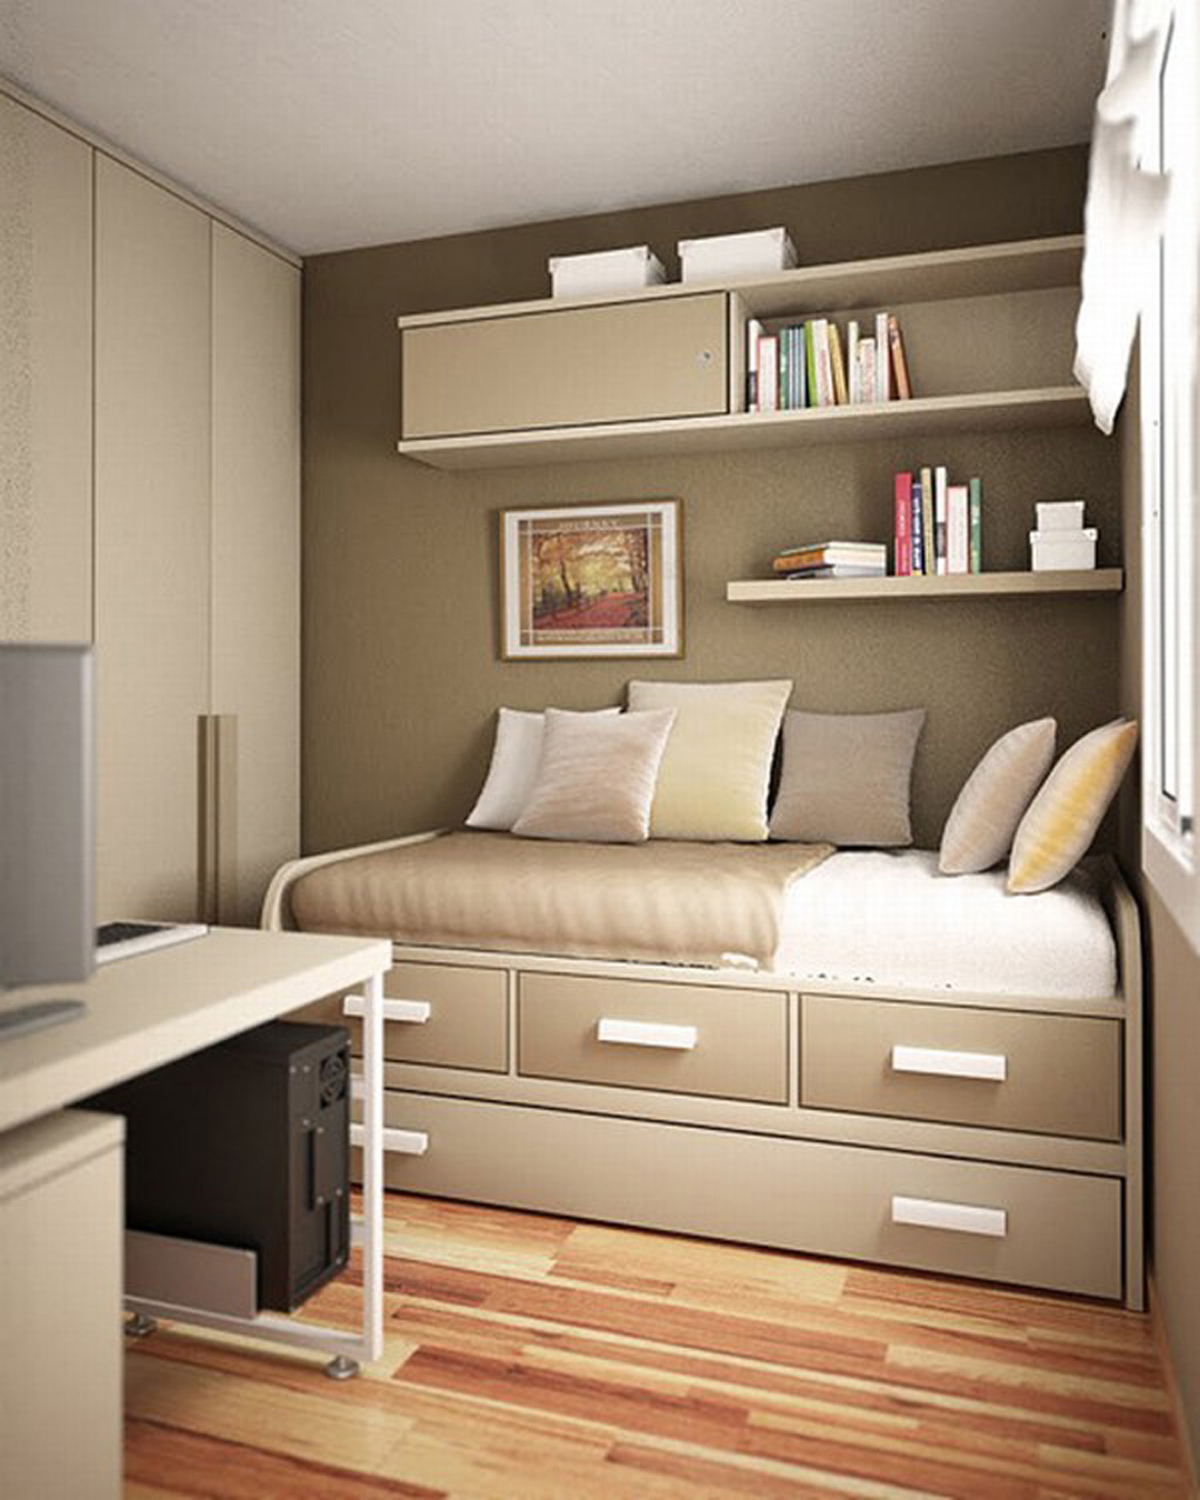 Small Bedroom Design Ideas Pictures Interior Designs Room